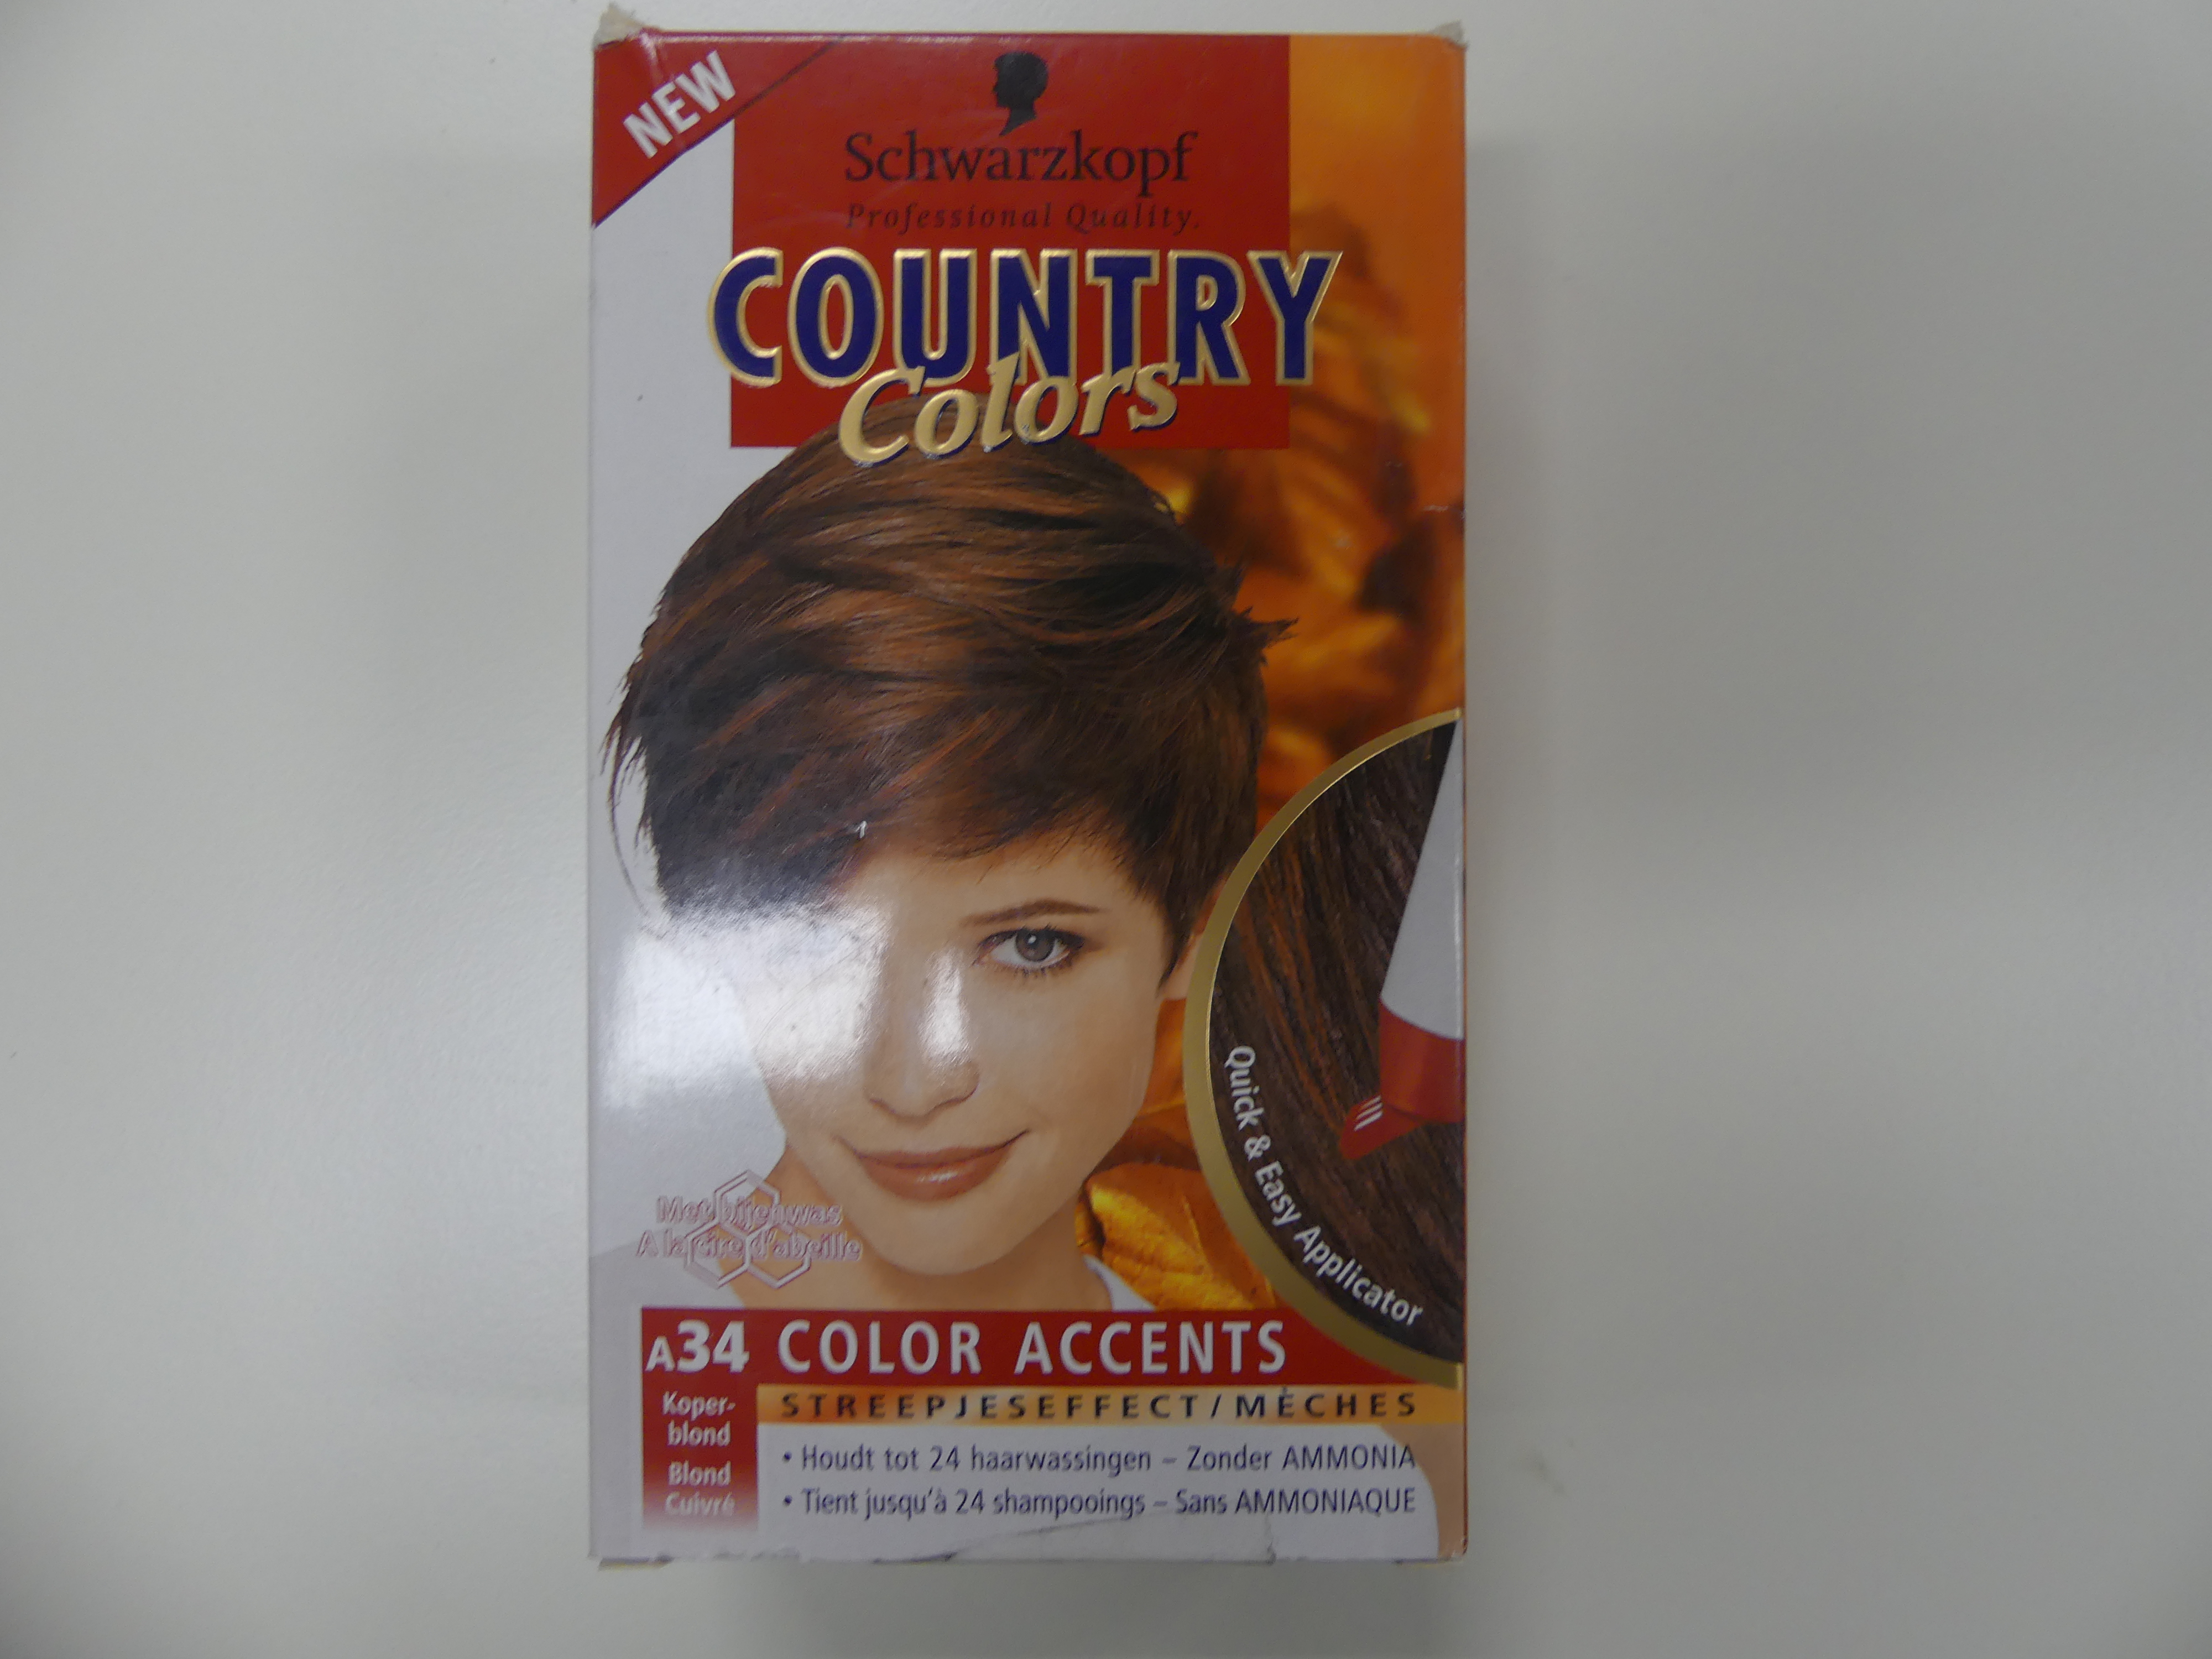 5x Schwarzkopf Country Colors koper blond a34